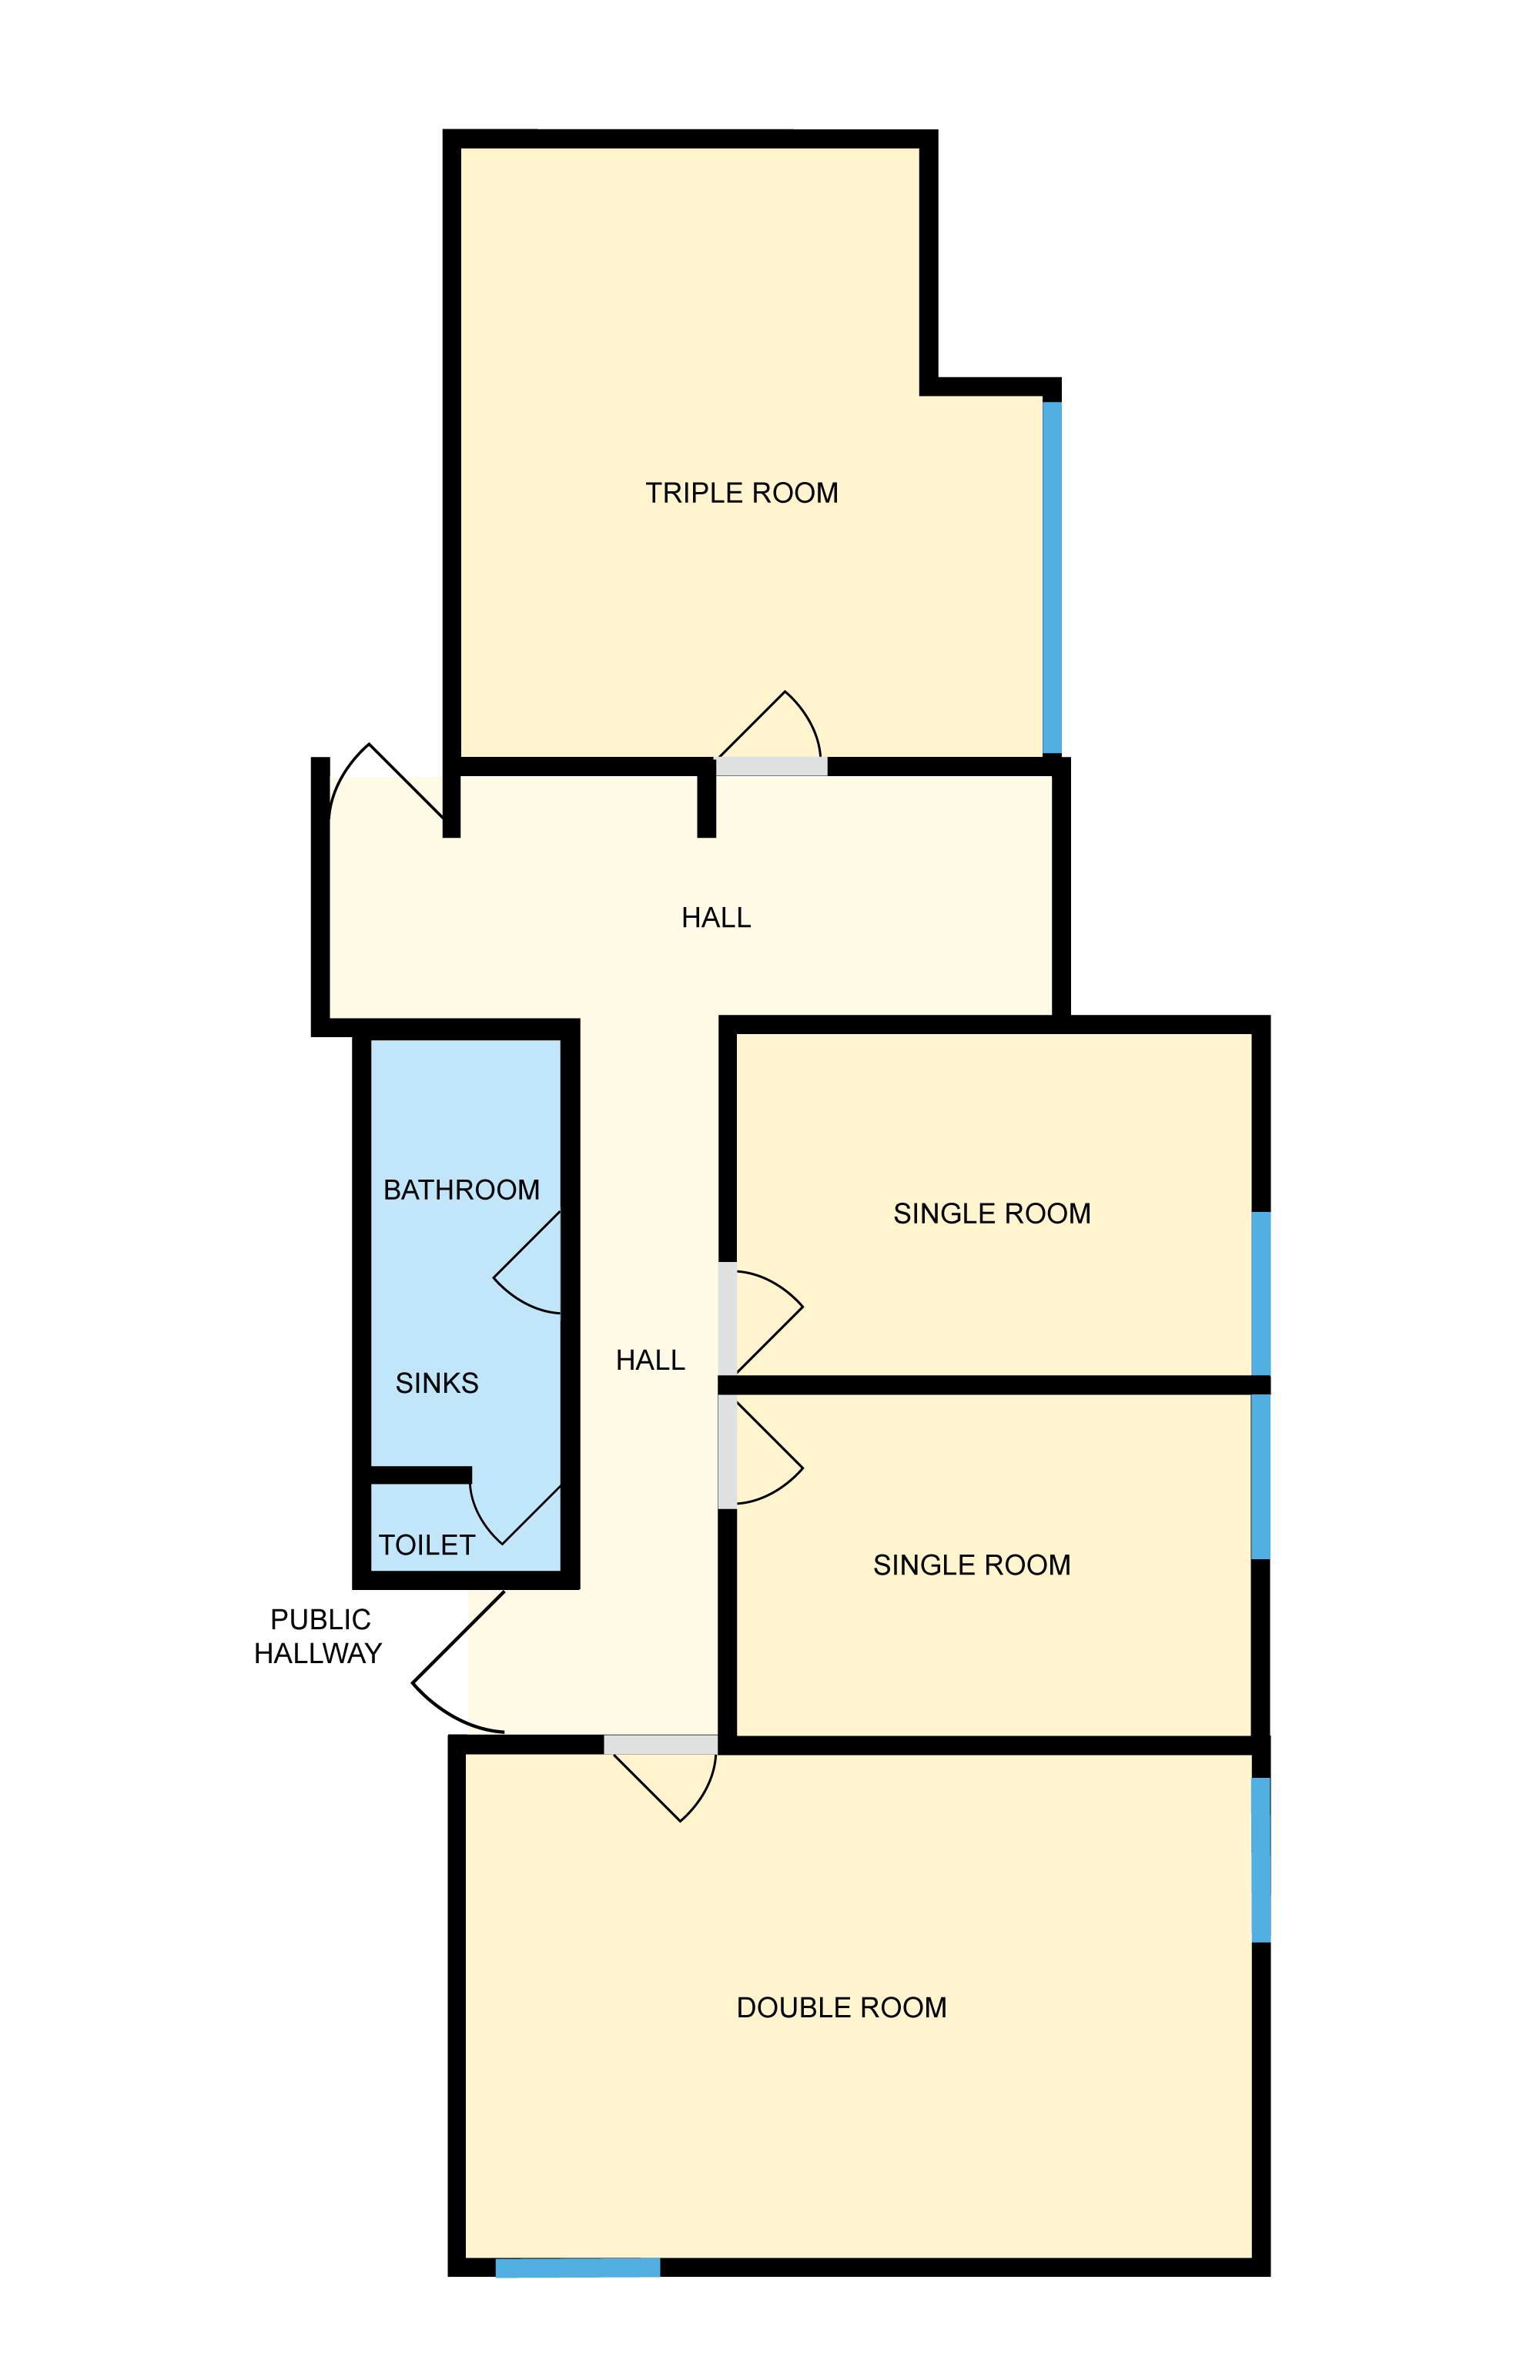 Pod-style room configuration